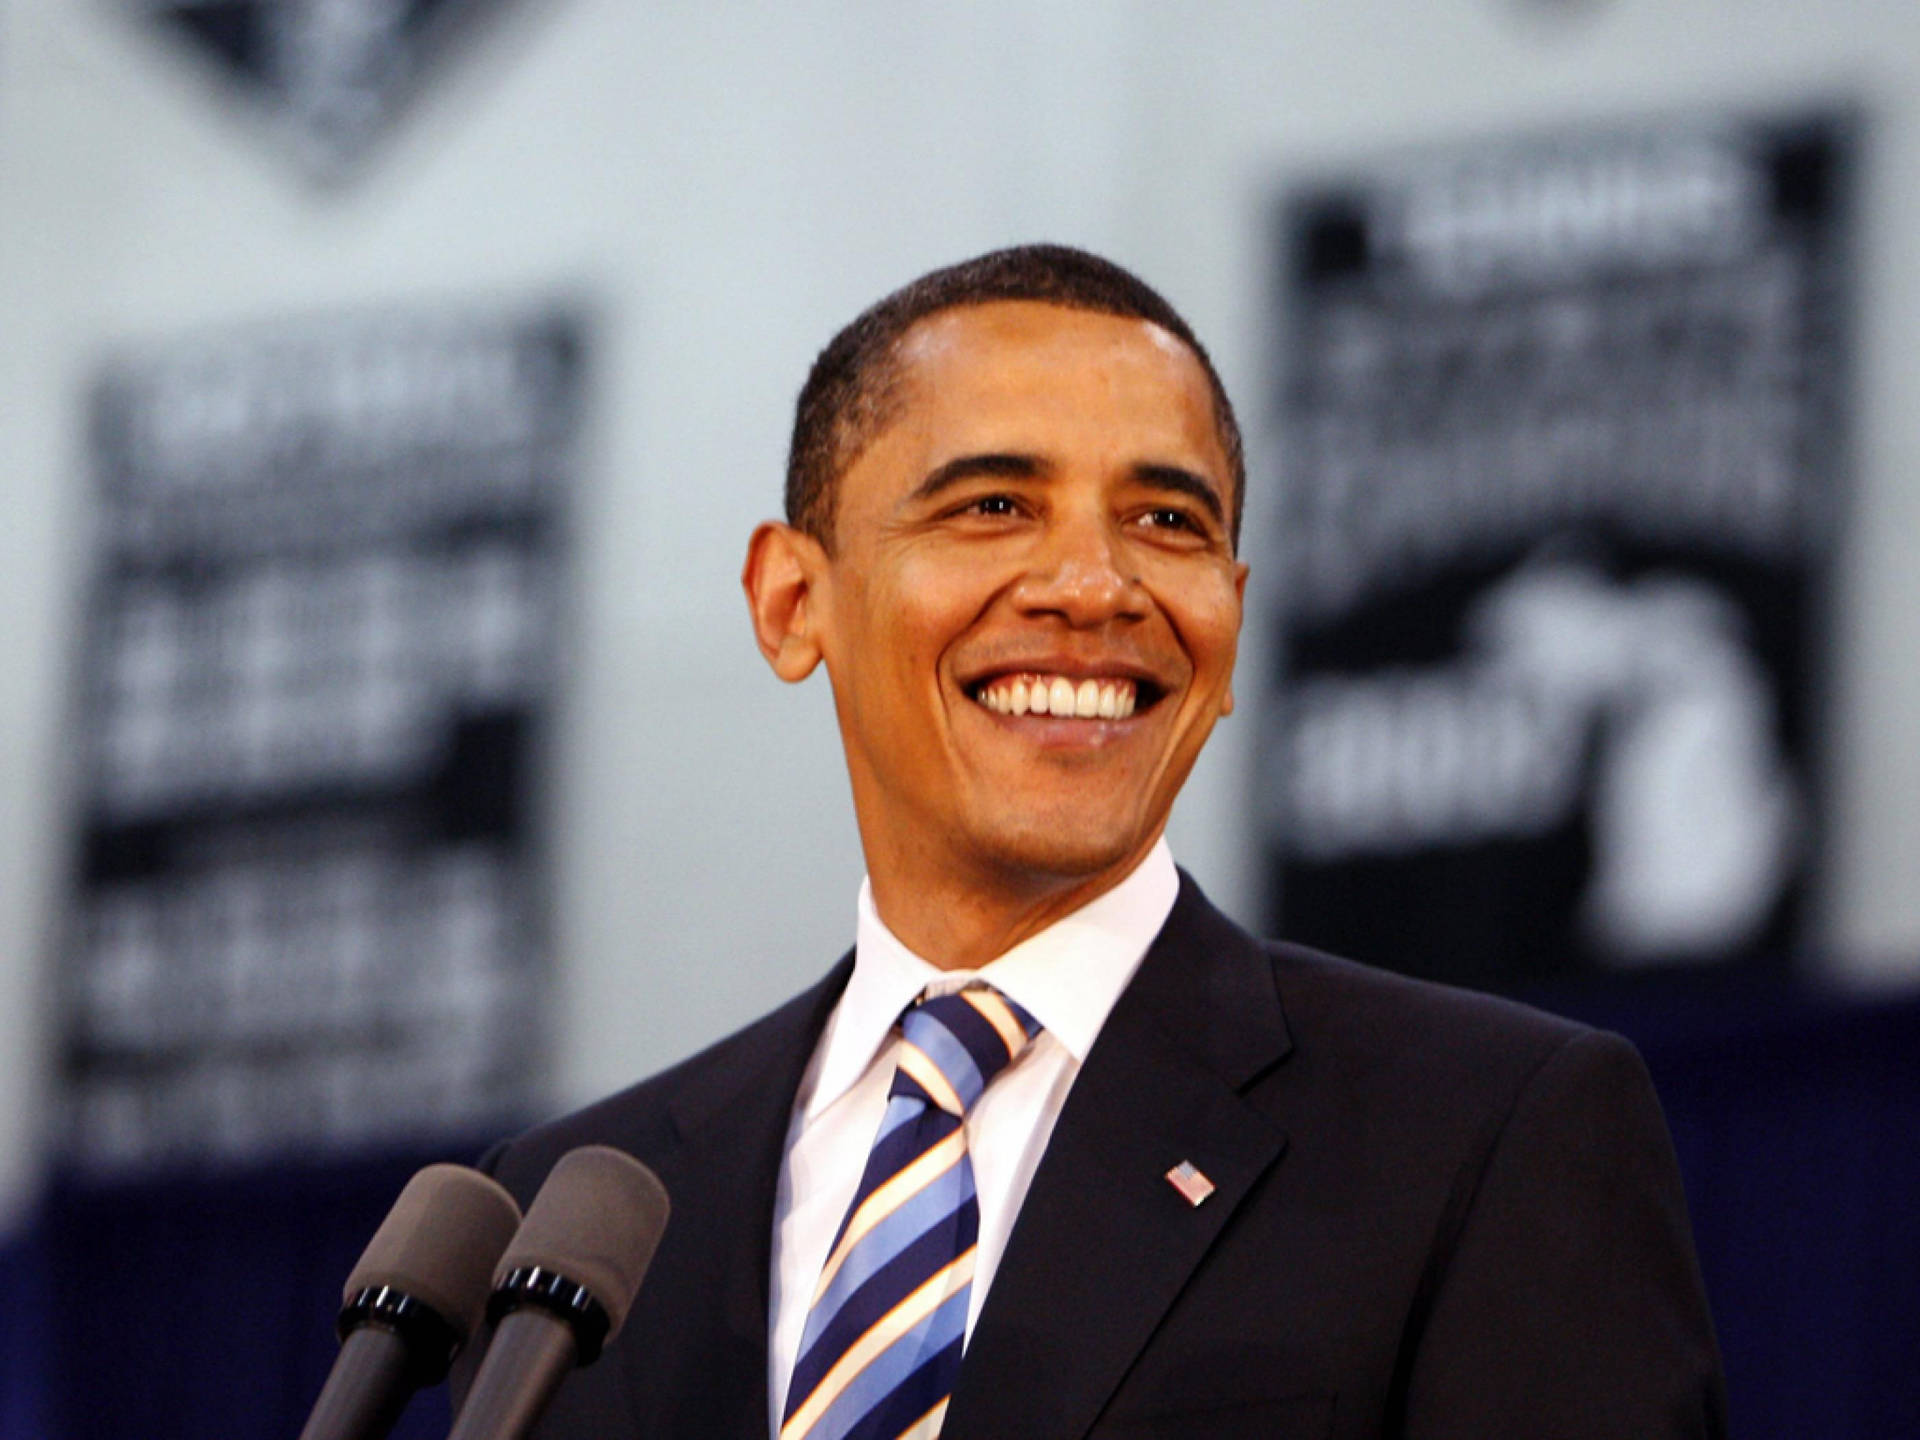 Barack Obama Smiling President Background